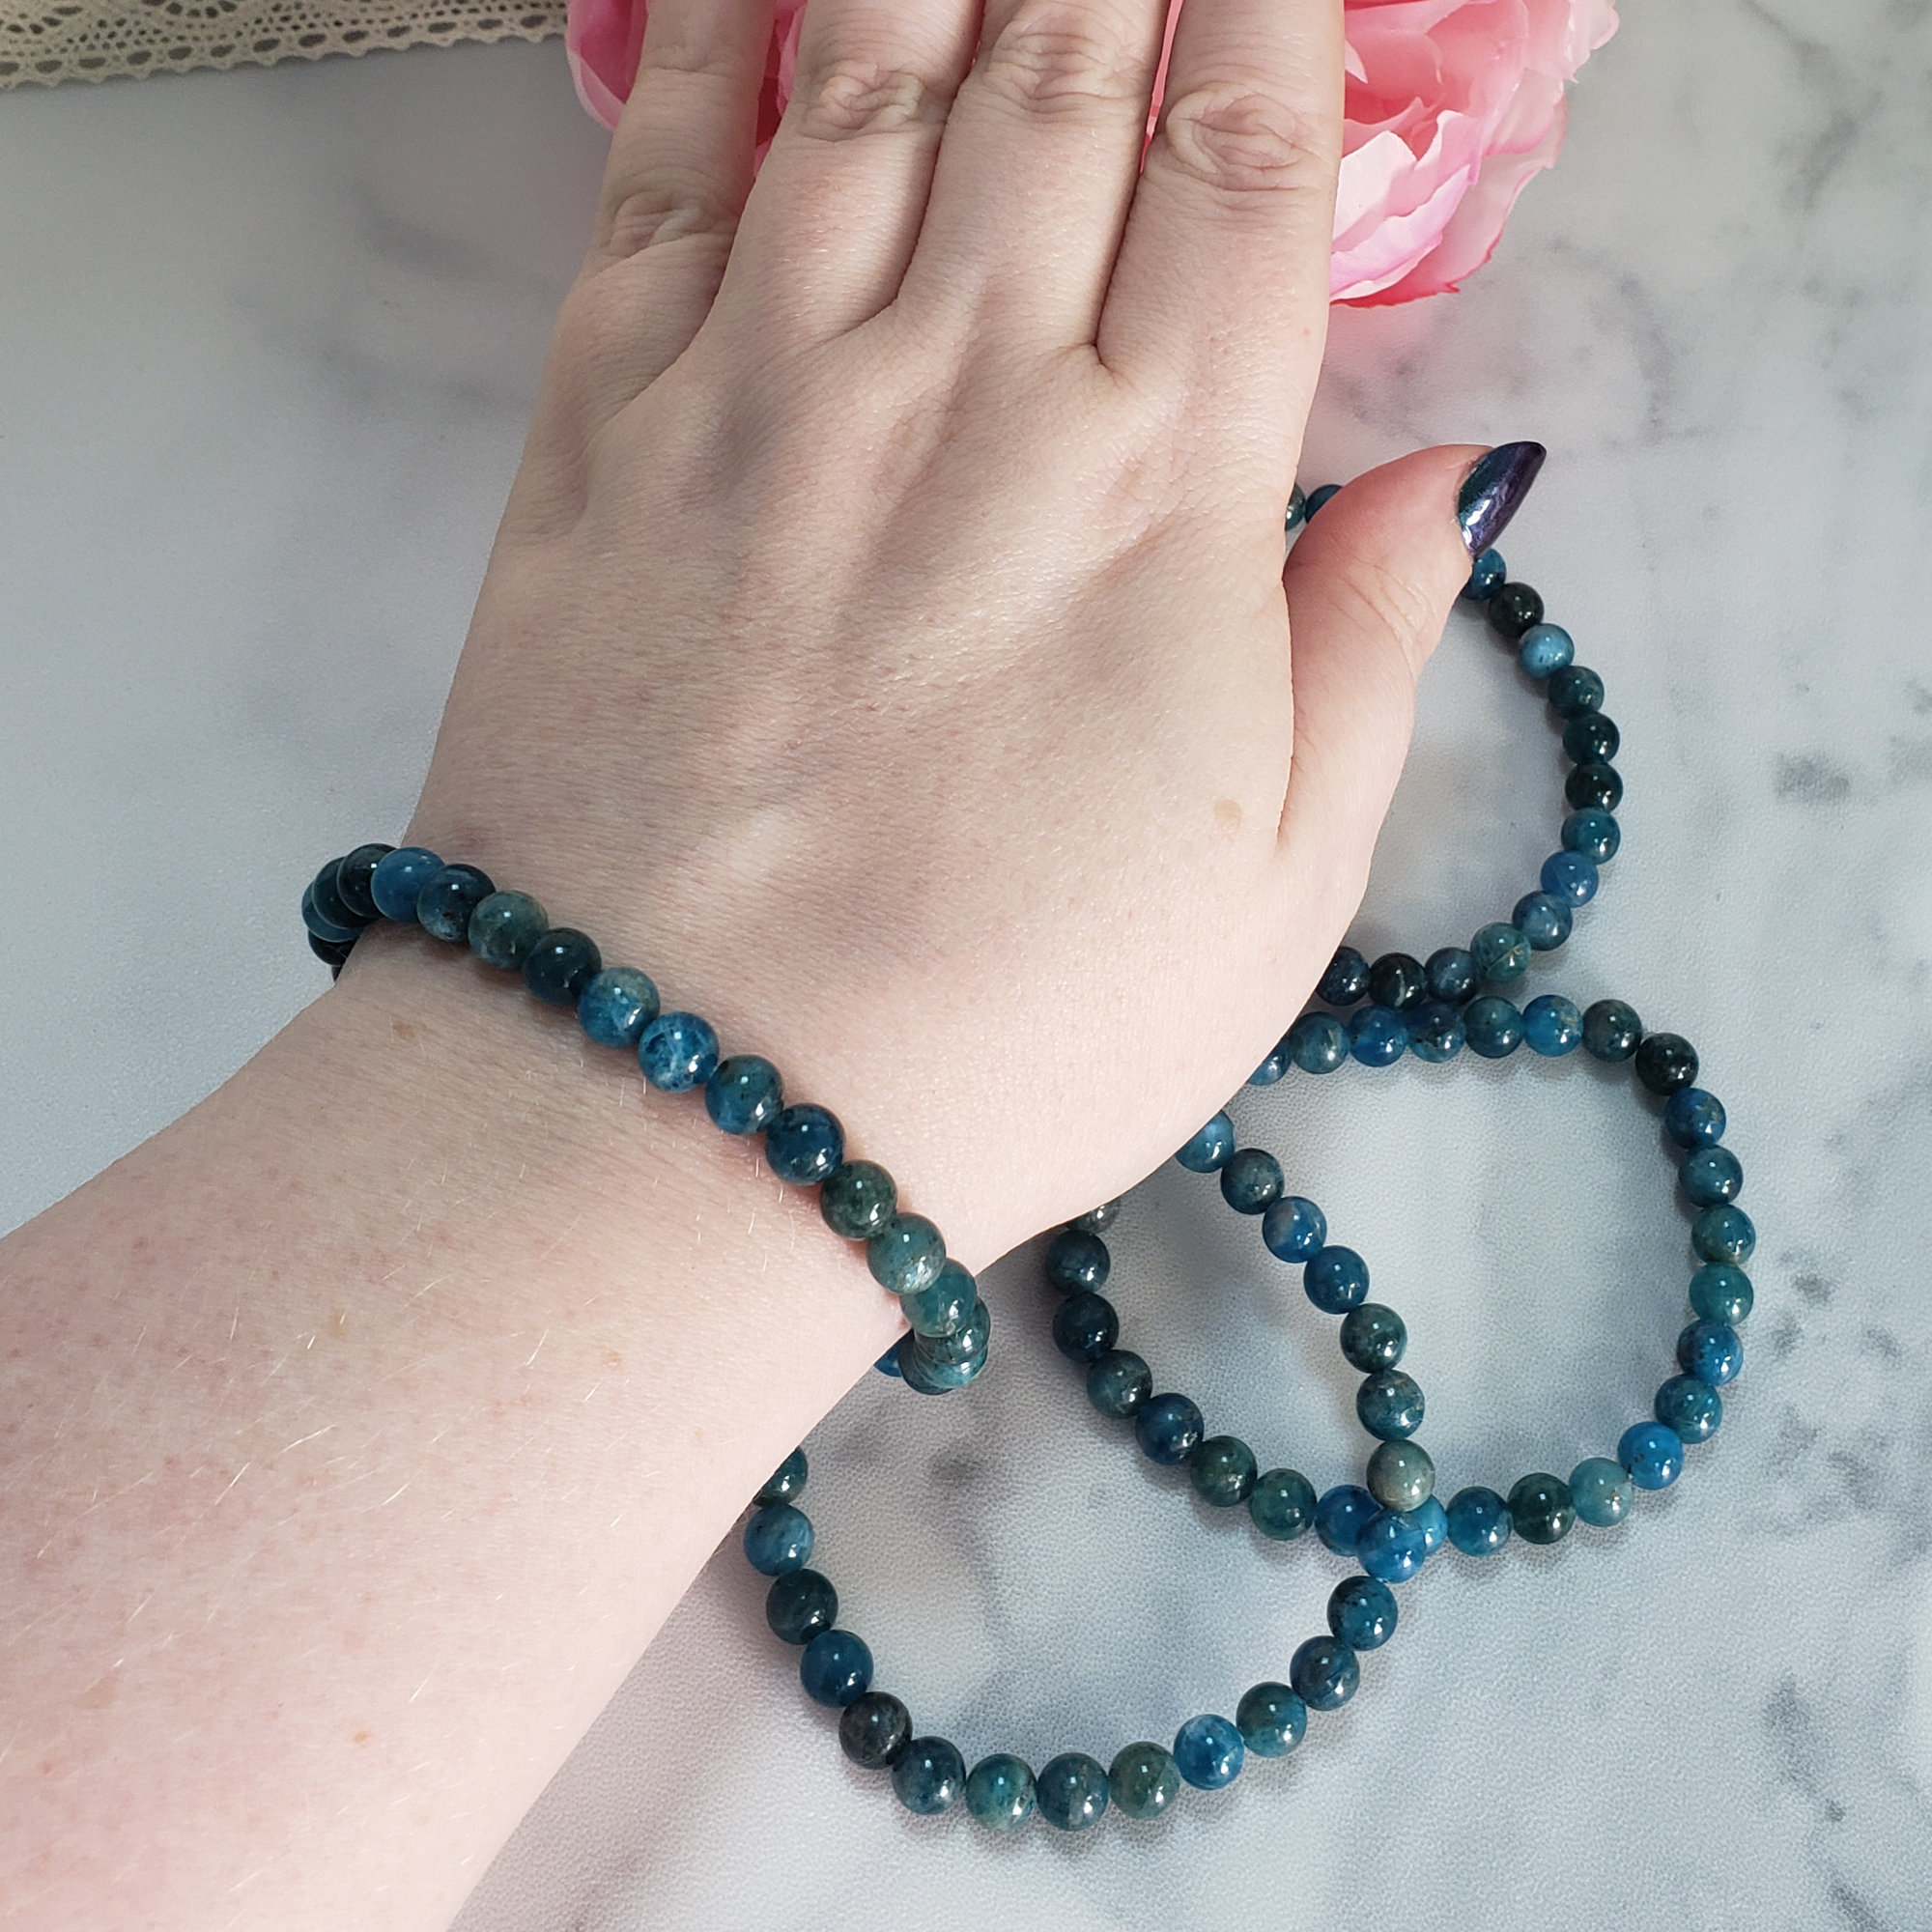 Blue Apatite Crystal Natural Gemstone 6mm Bead Bracelet - On Wrist Above Other Bracelets Natural Crystal Jewelry